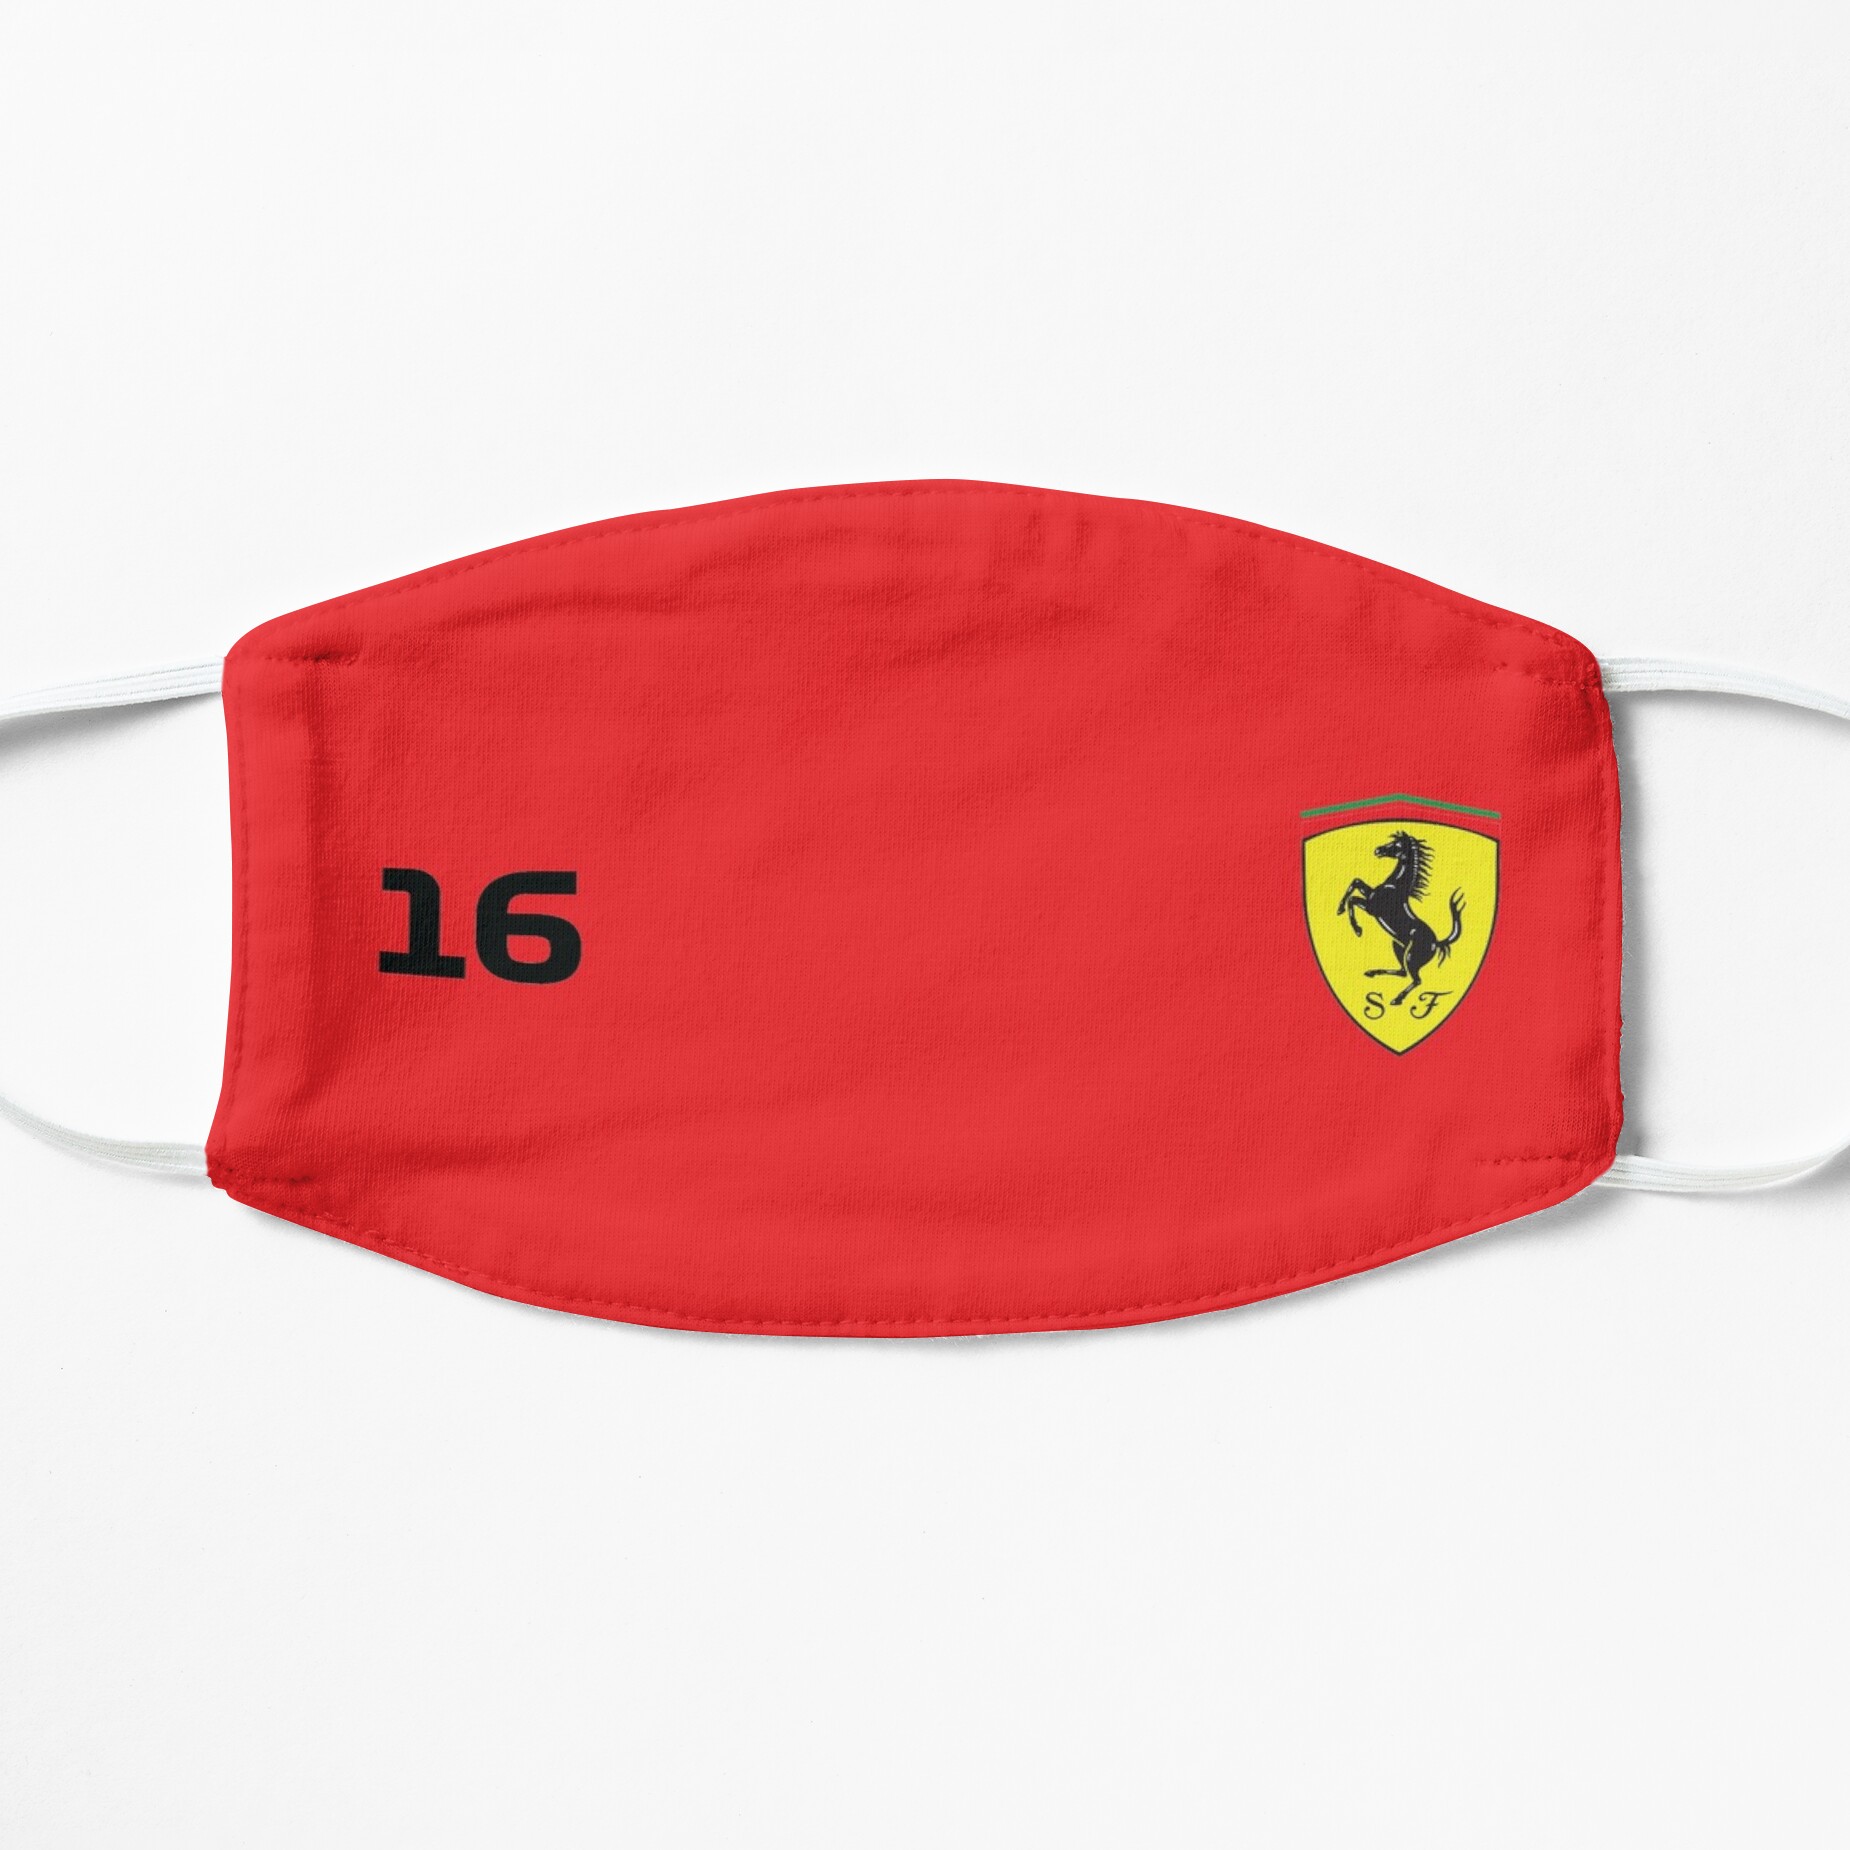 Sainz explains why P3 is “symbolic” for Ferrari